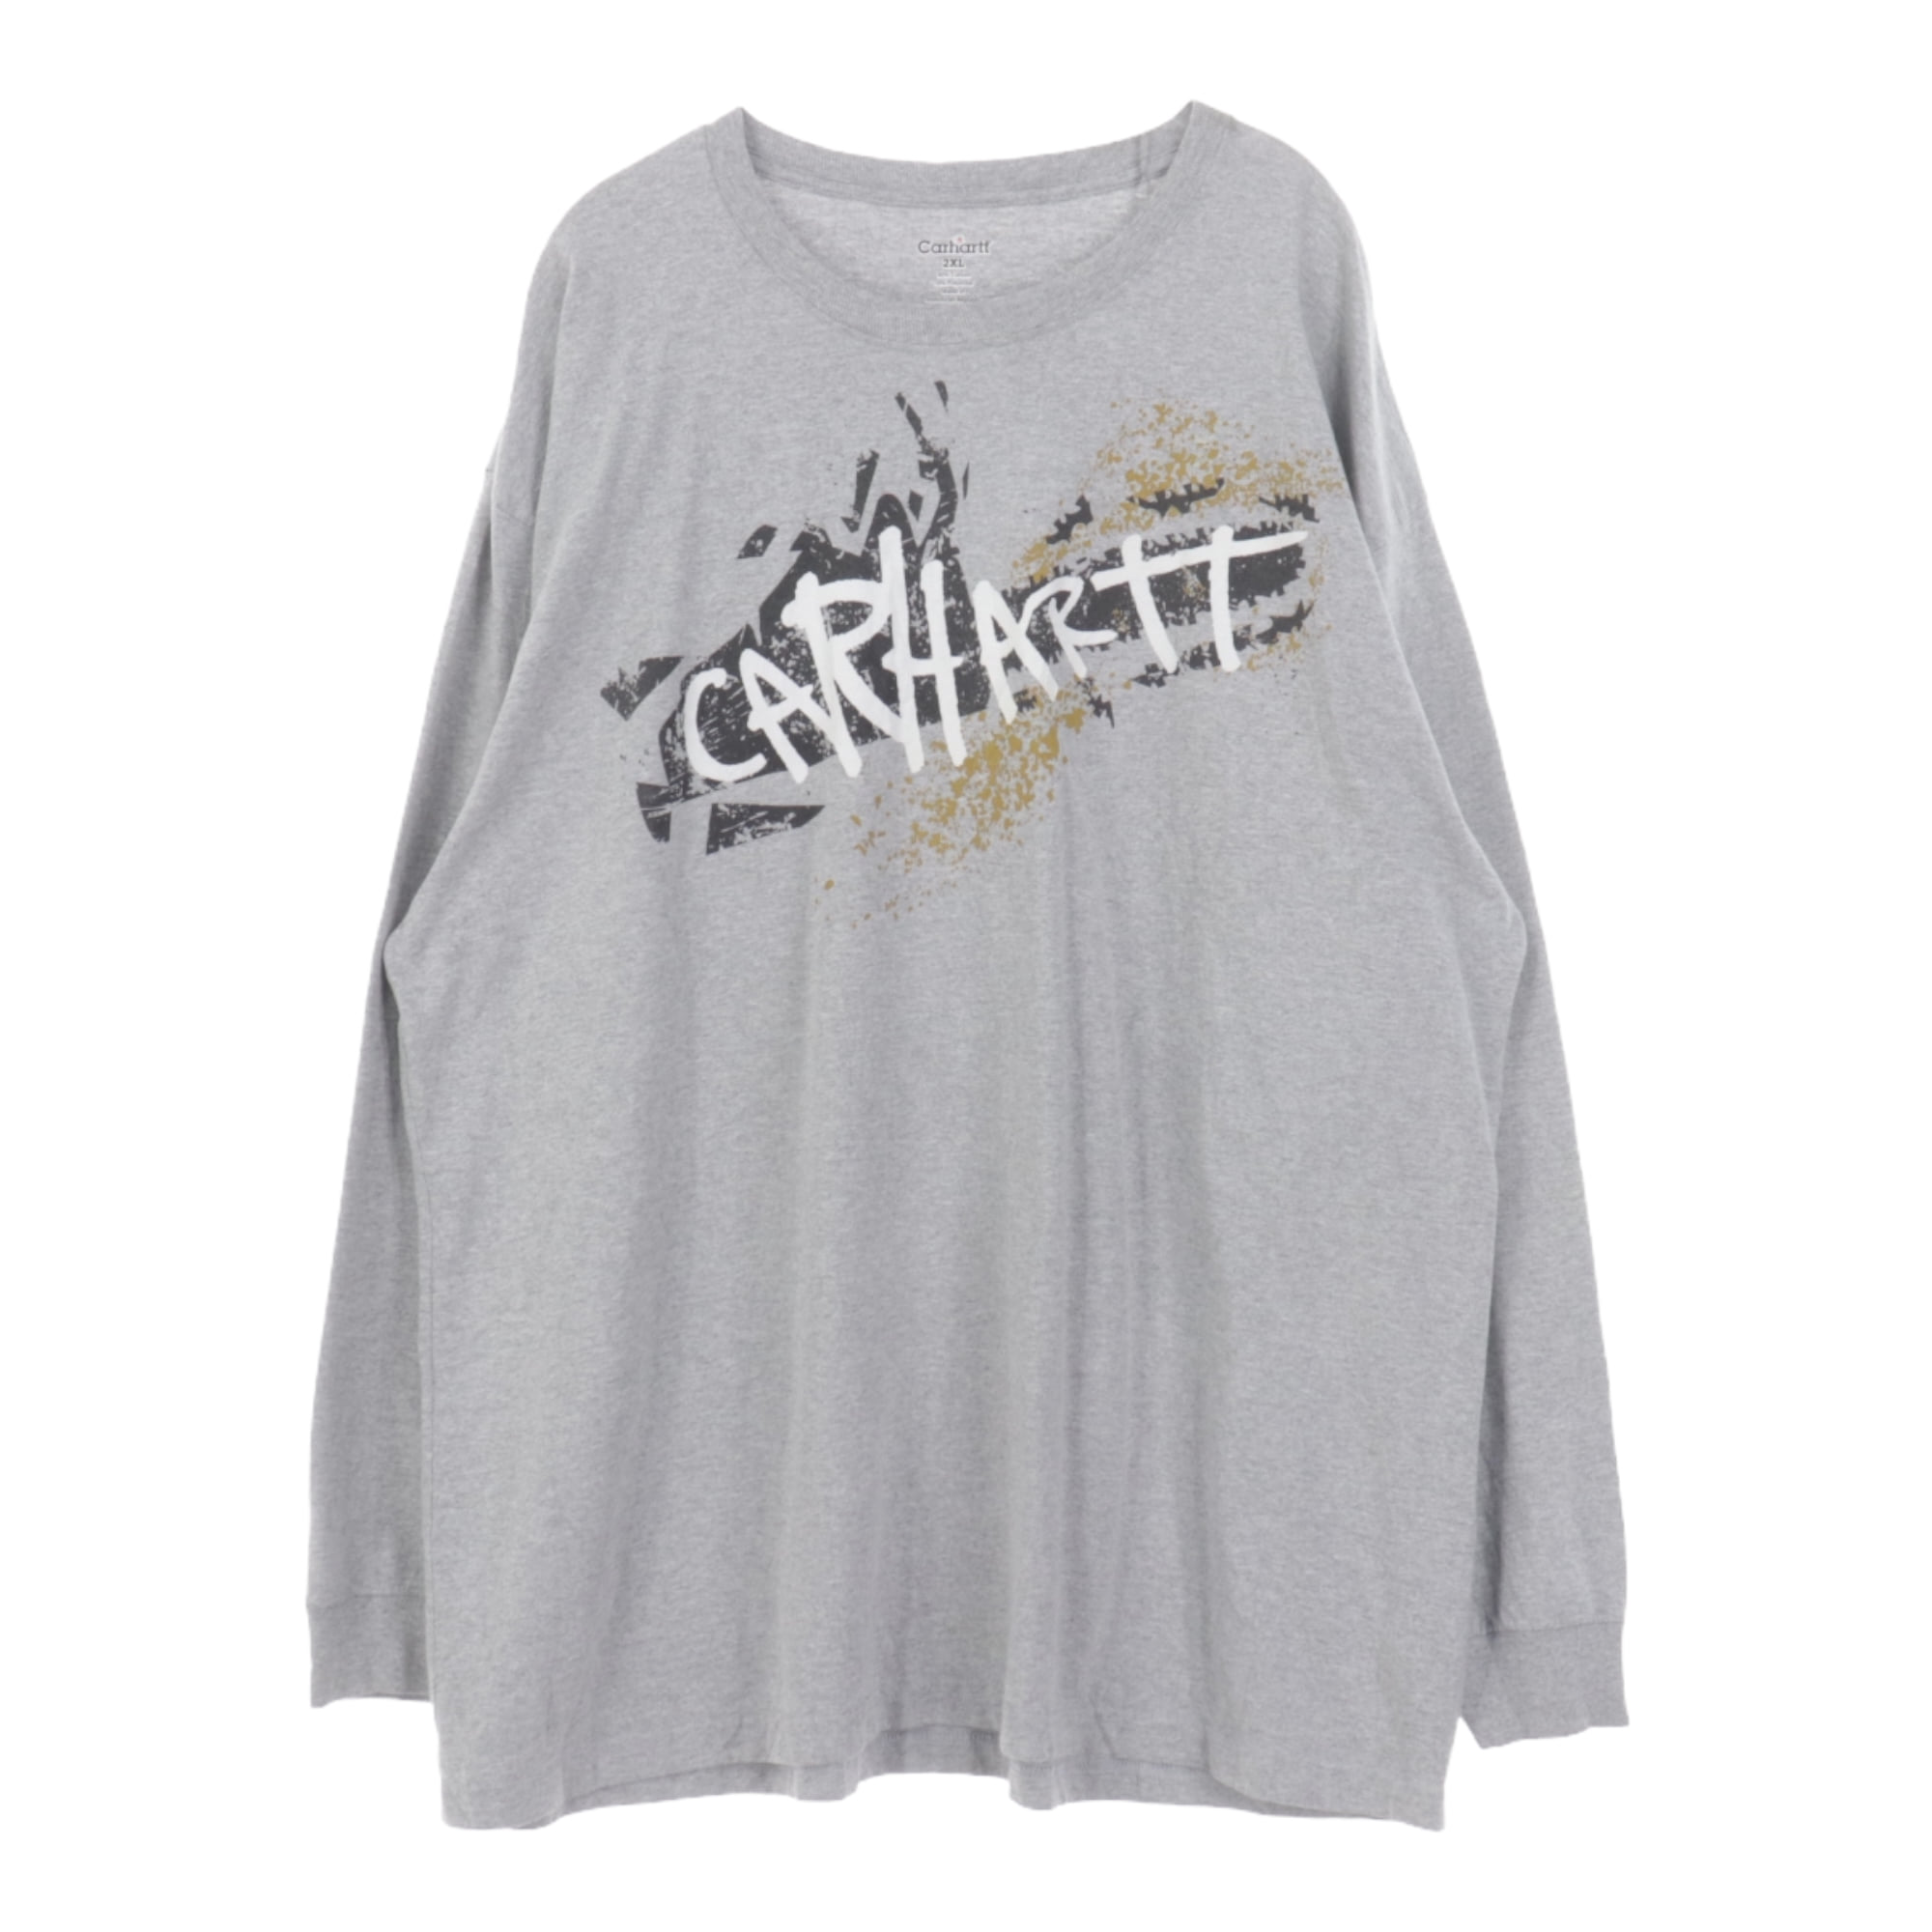 Carhartt,T-Shirts